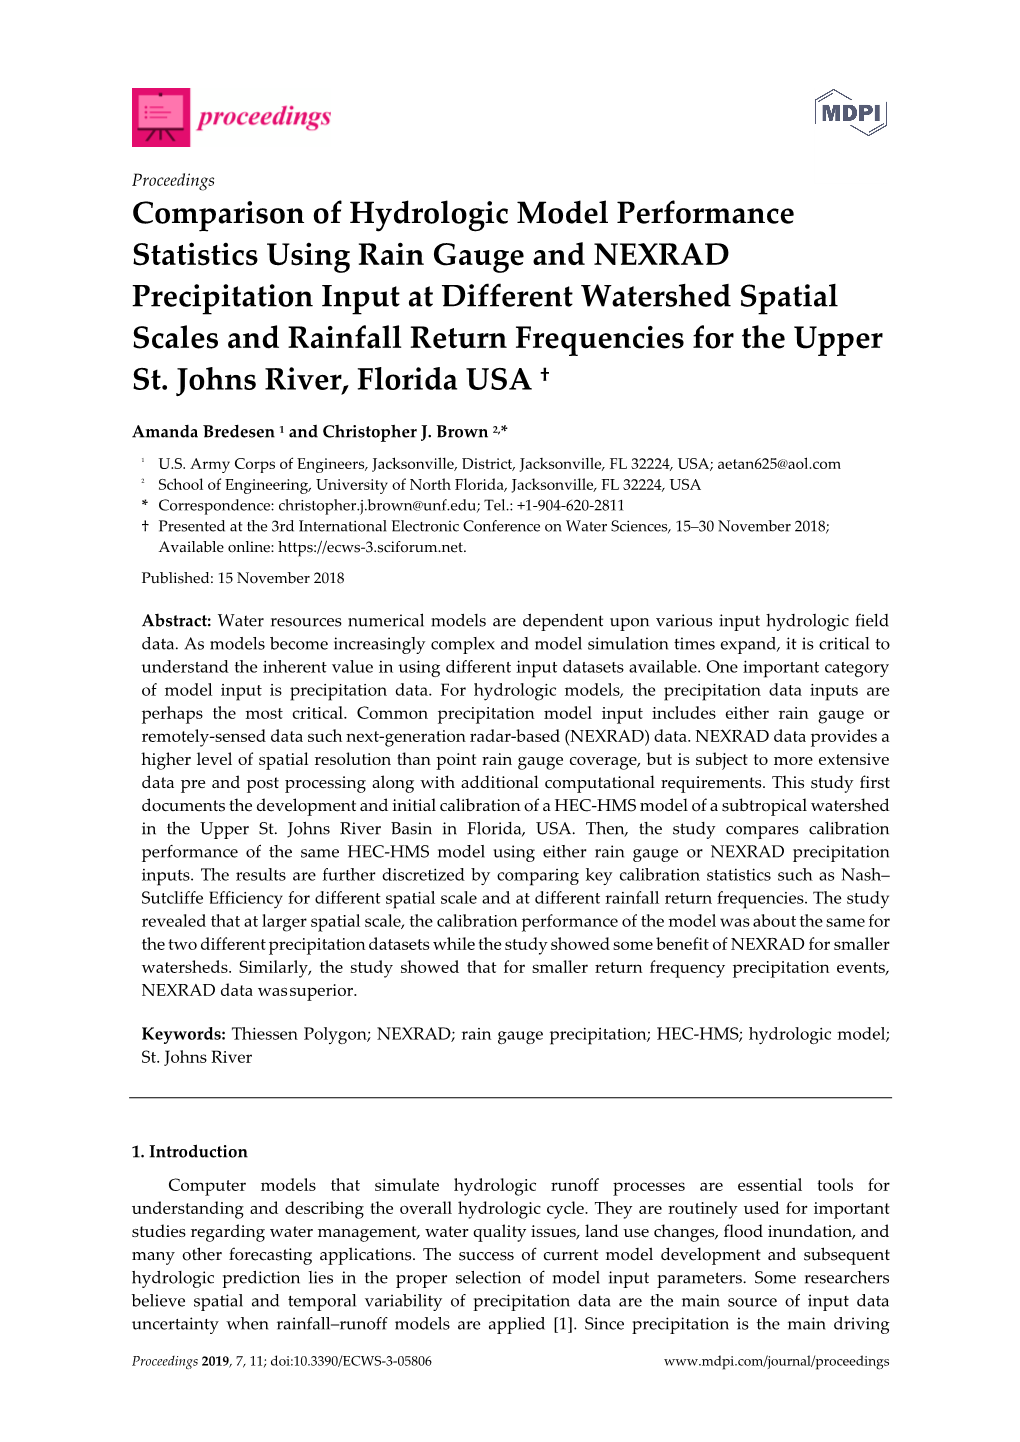 Comparison of Hydrologic Model Performance Statistics Using Rain Gauge and NEXRAD Precipitation Input at Different Watershed